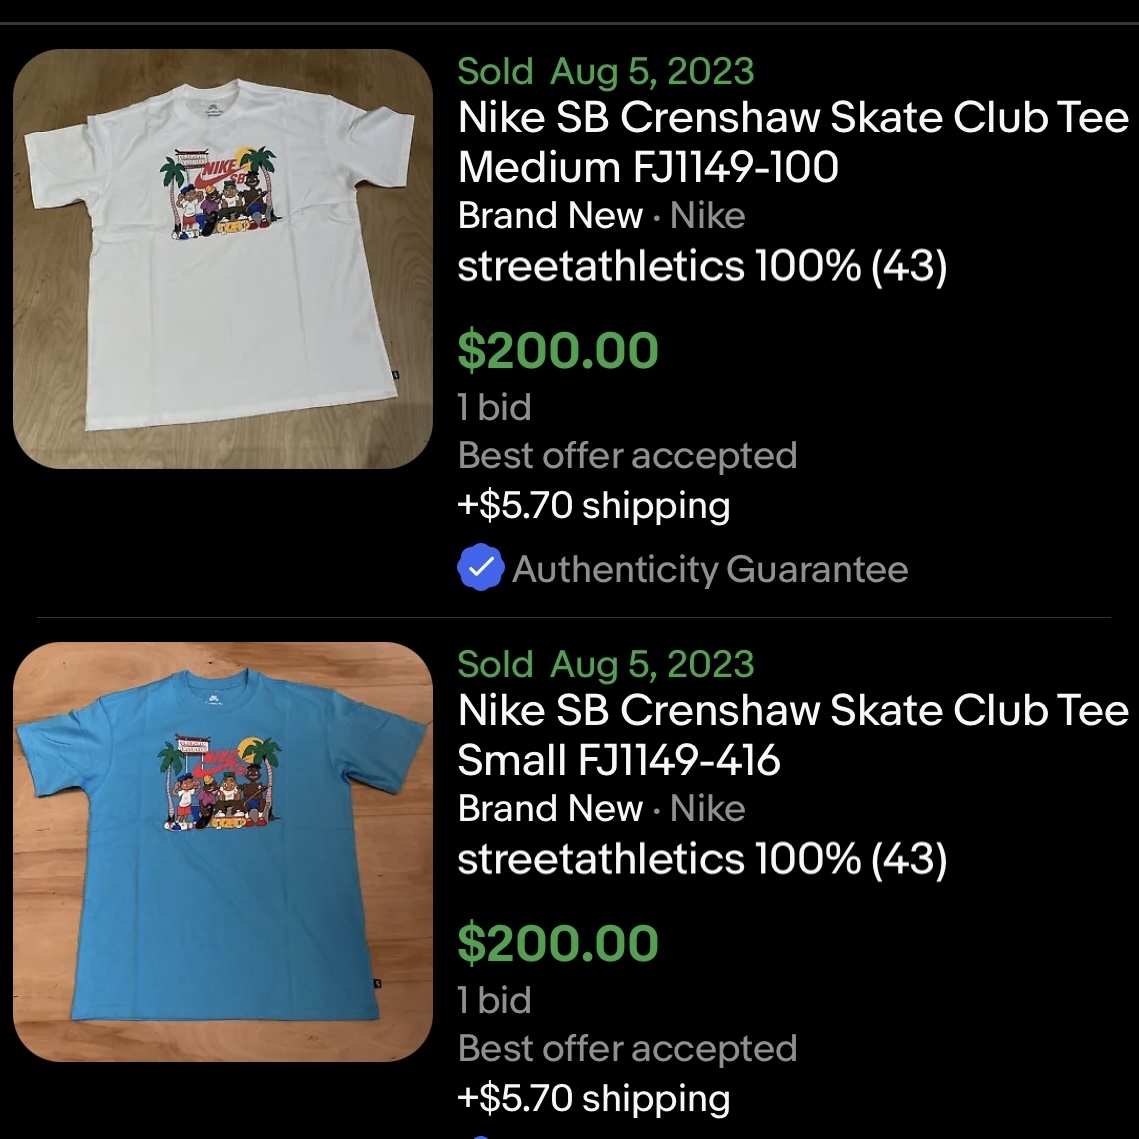 Crenshaw Skate Club Nike SB Shirt Canceled